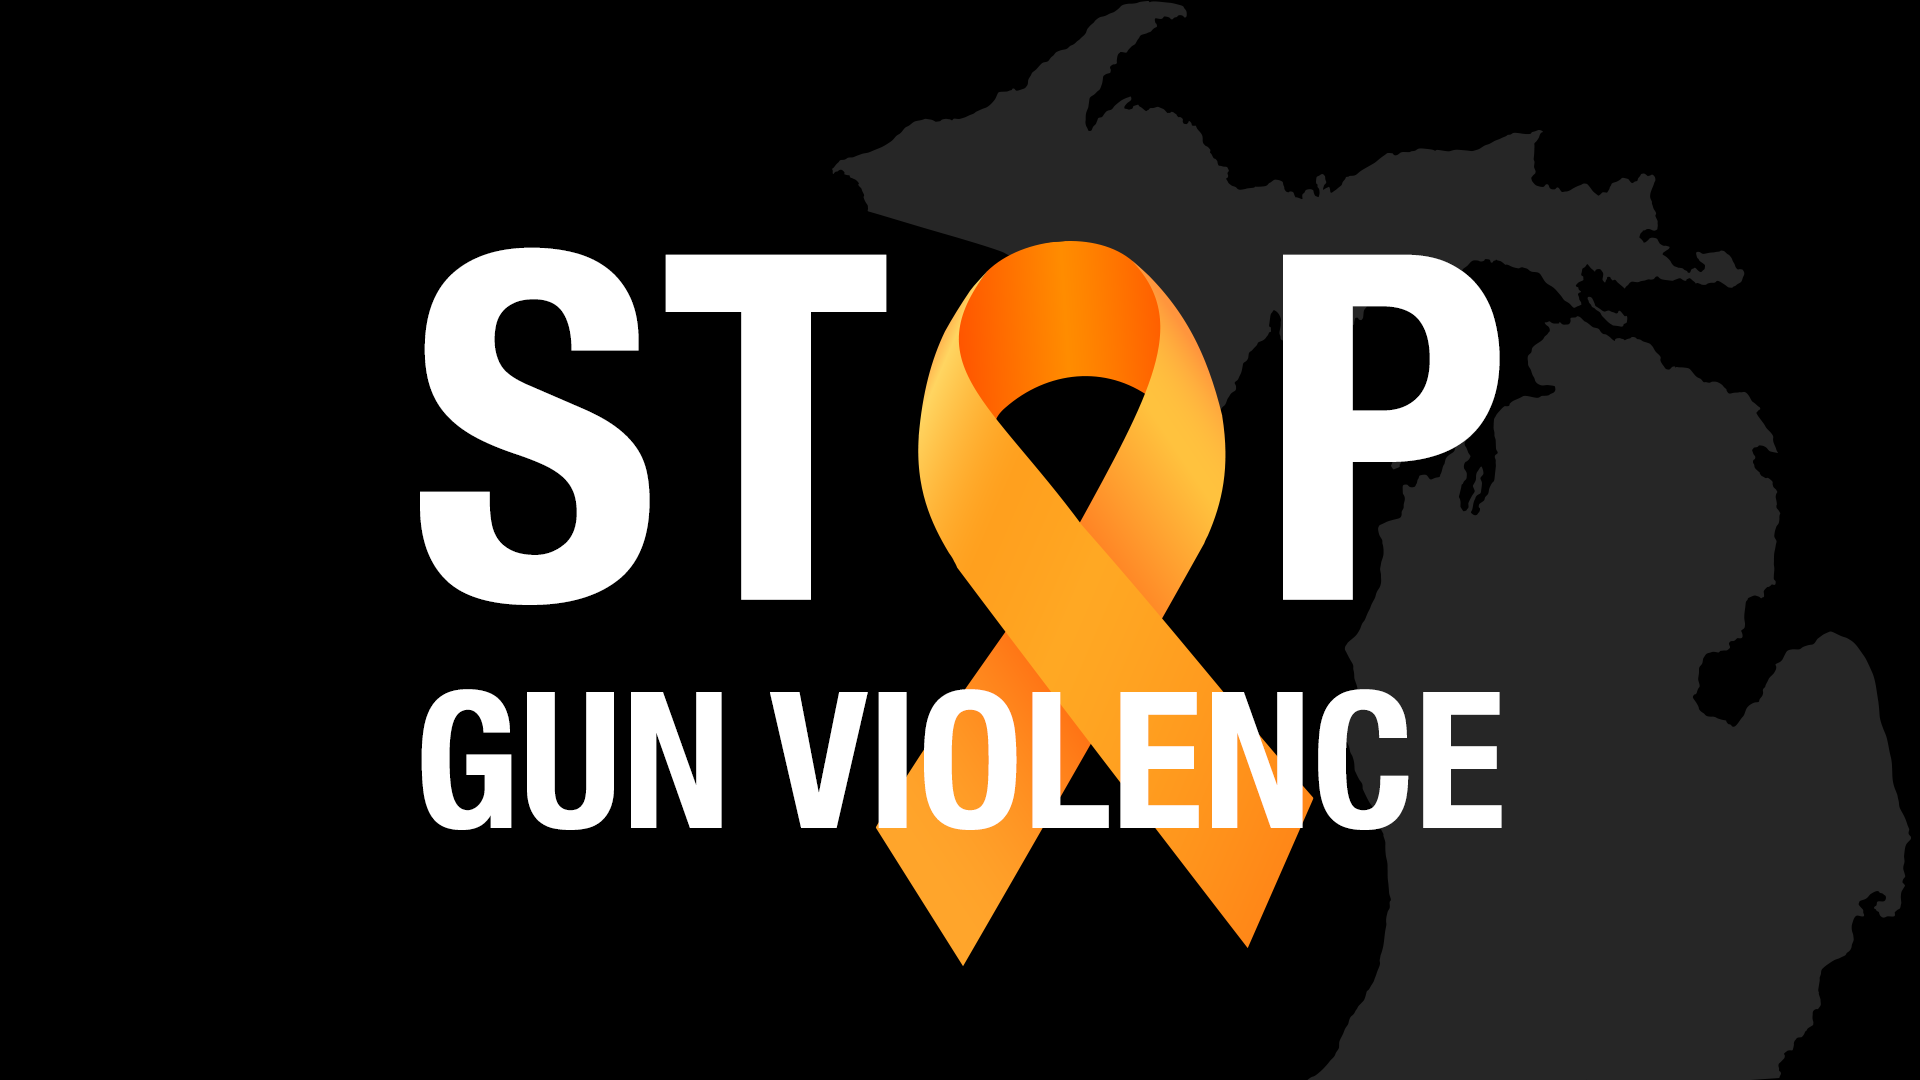 Senator Polehanki introduces bill to ban bump stocks to protect Michigan residents from gun violence